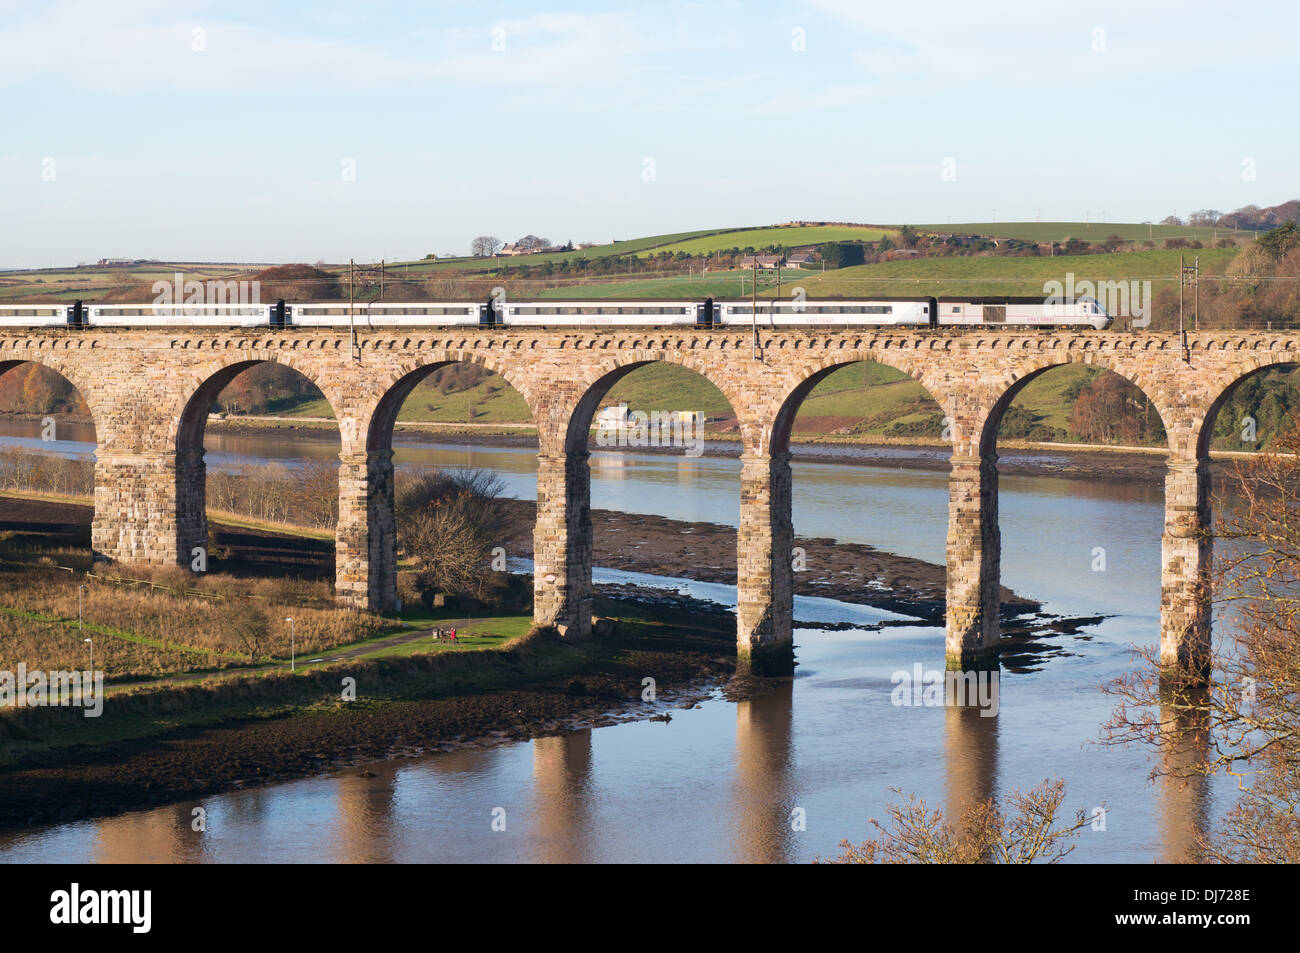 East coast express treno attraversando il confine reale ponte sopra il fiume Tweed, Berwick upon Tweed, Northumberland, England, Regno Unito Foto Stock